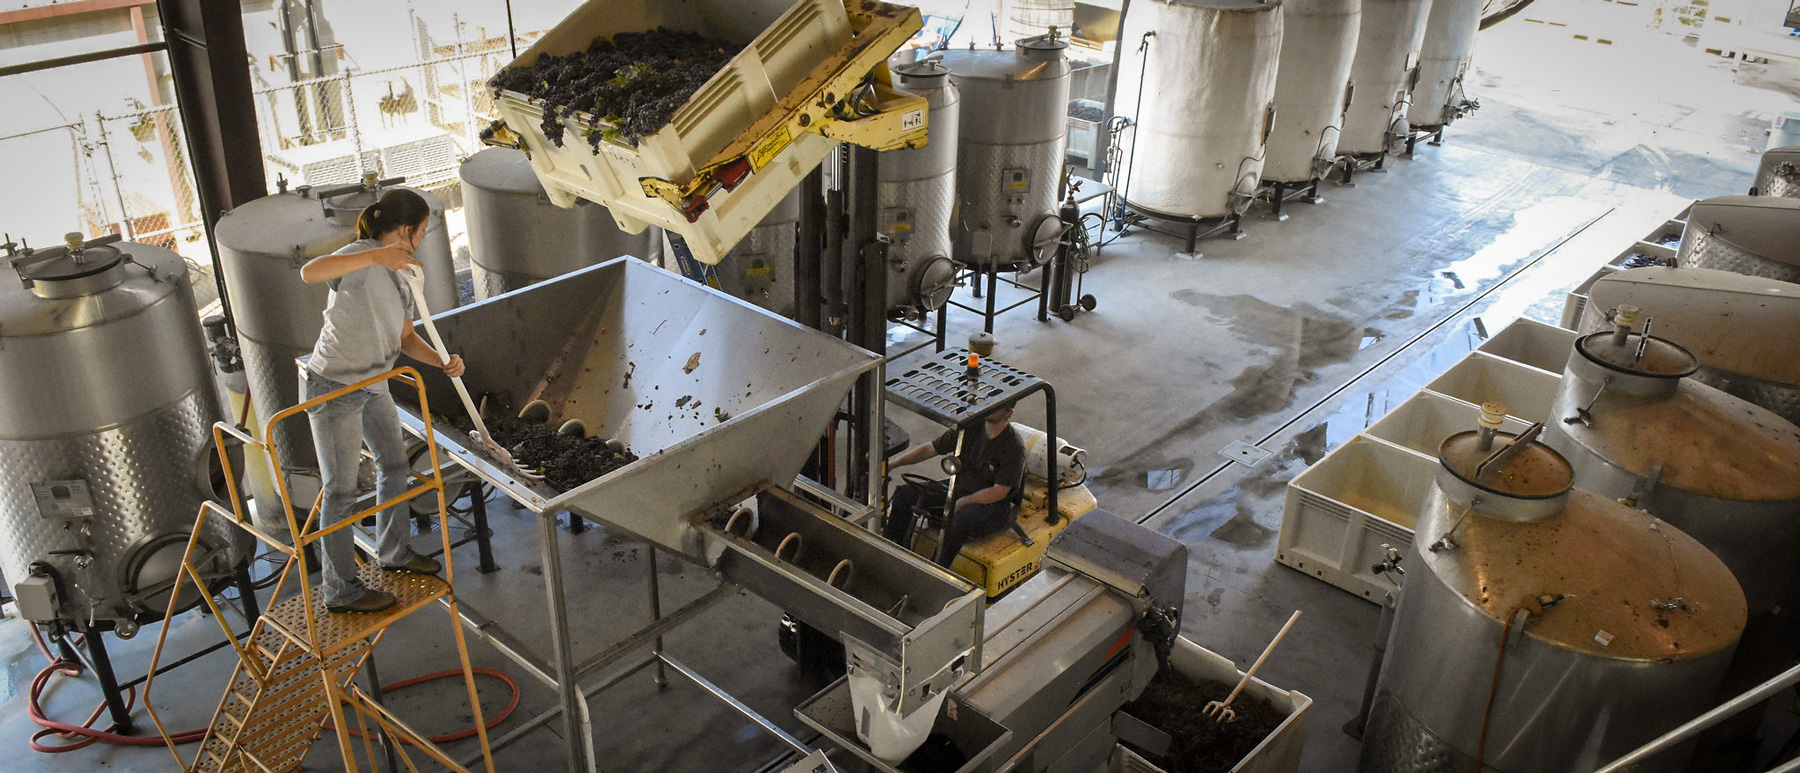 Students process Chardonnay wine grapes.